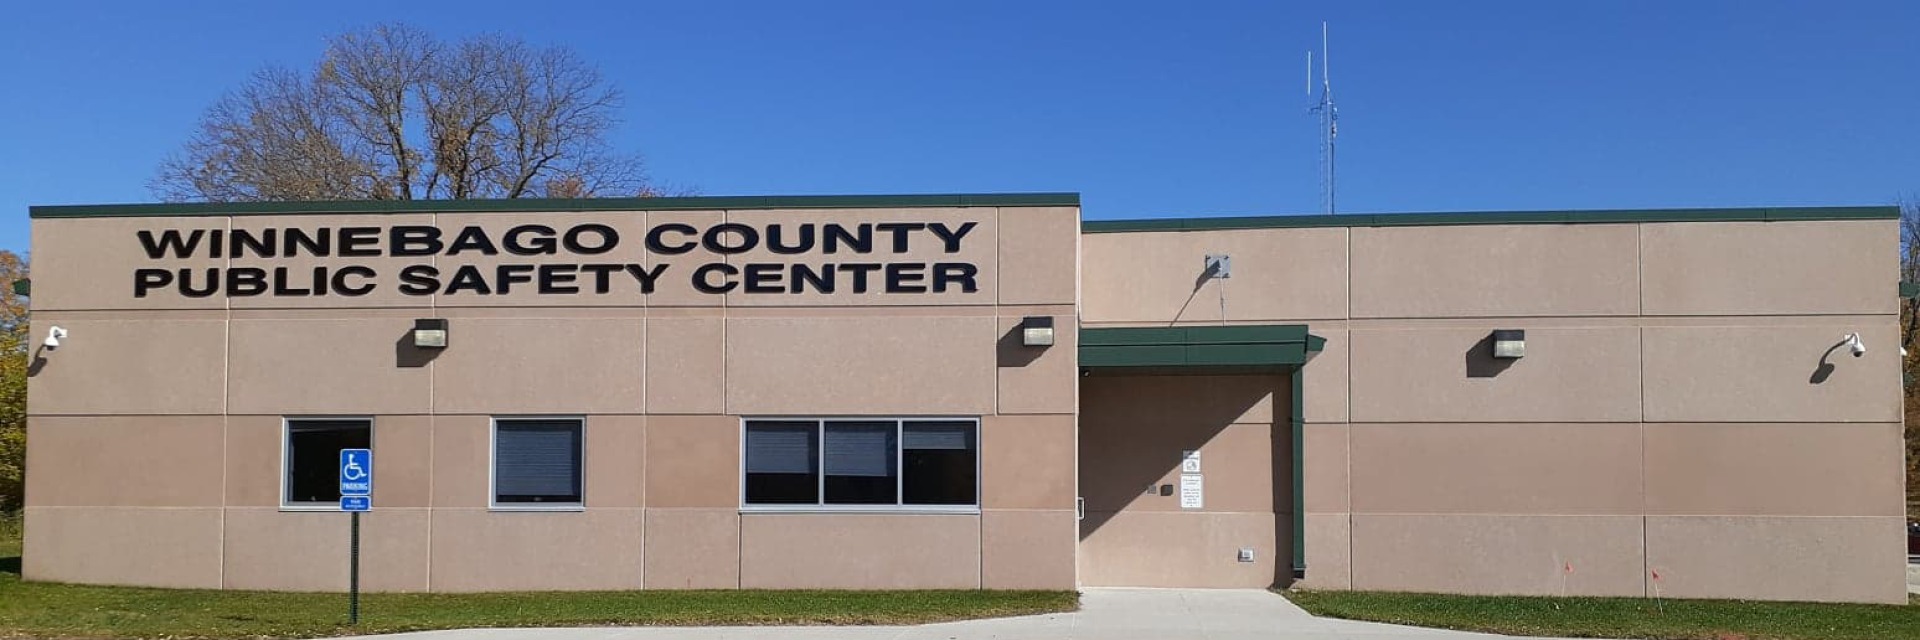 Winnebago County Public Safety Center